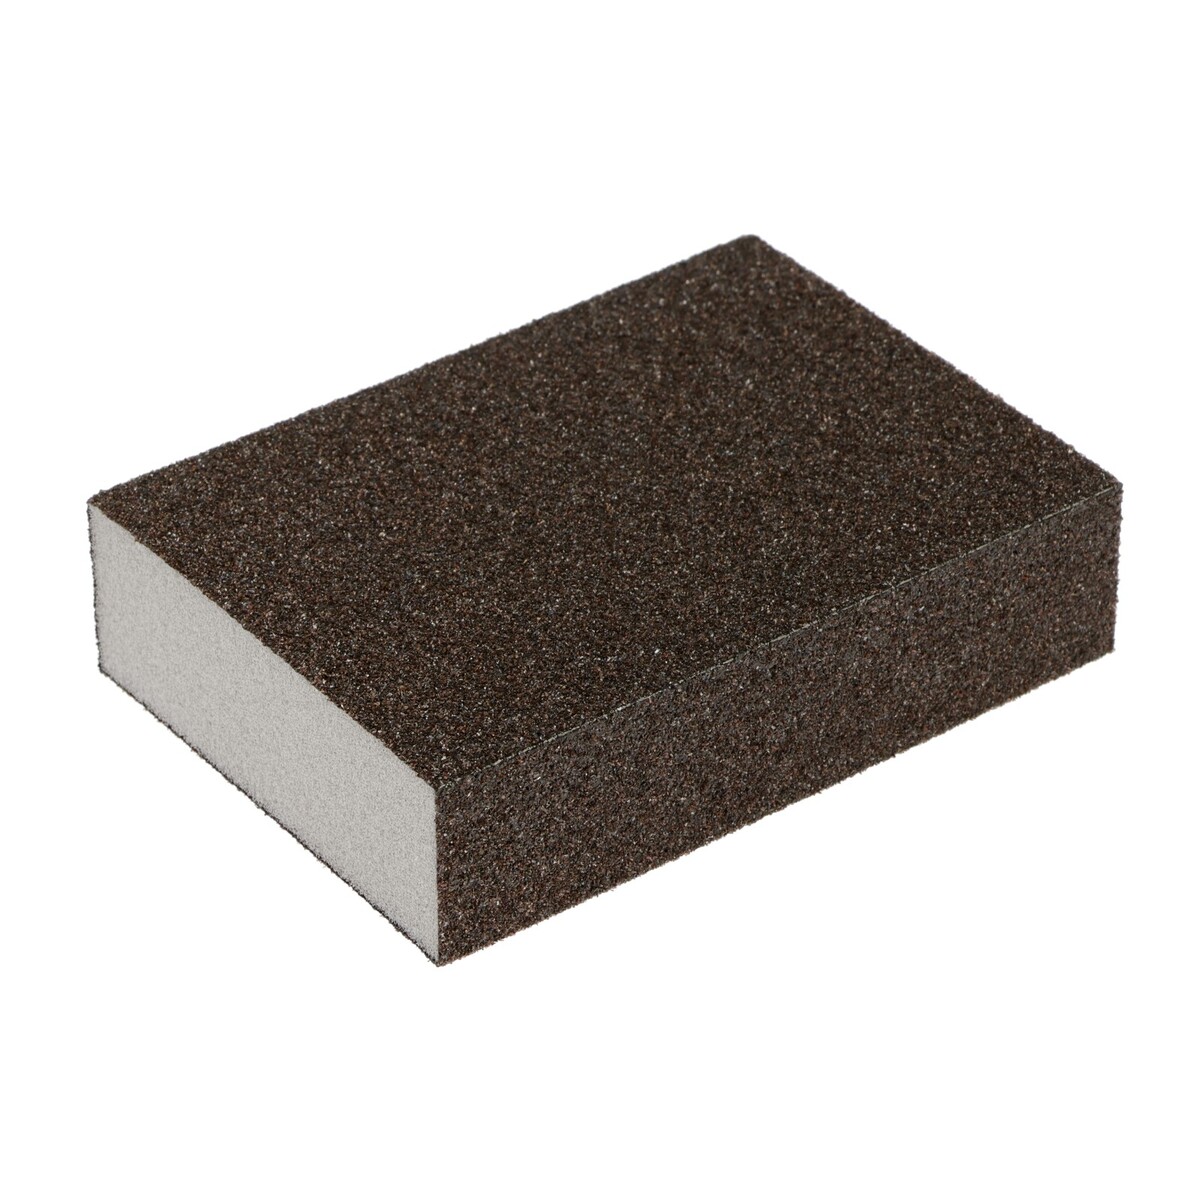 Губка абразивная шлифовальная тундра, твердая, 100 х 70 х 25 мм, p60 губка абразивная для подготовки металла к покраске 10×7×22 5 см р60